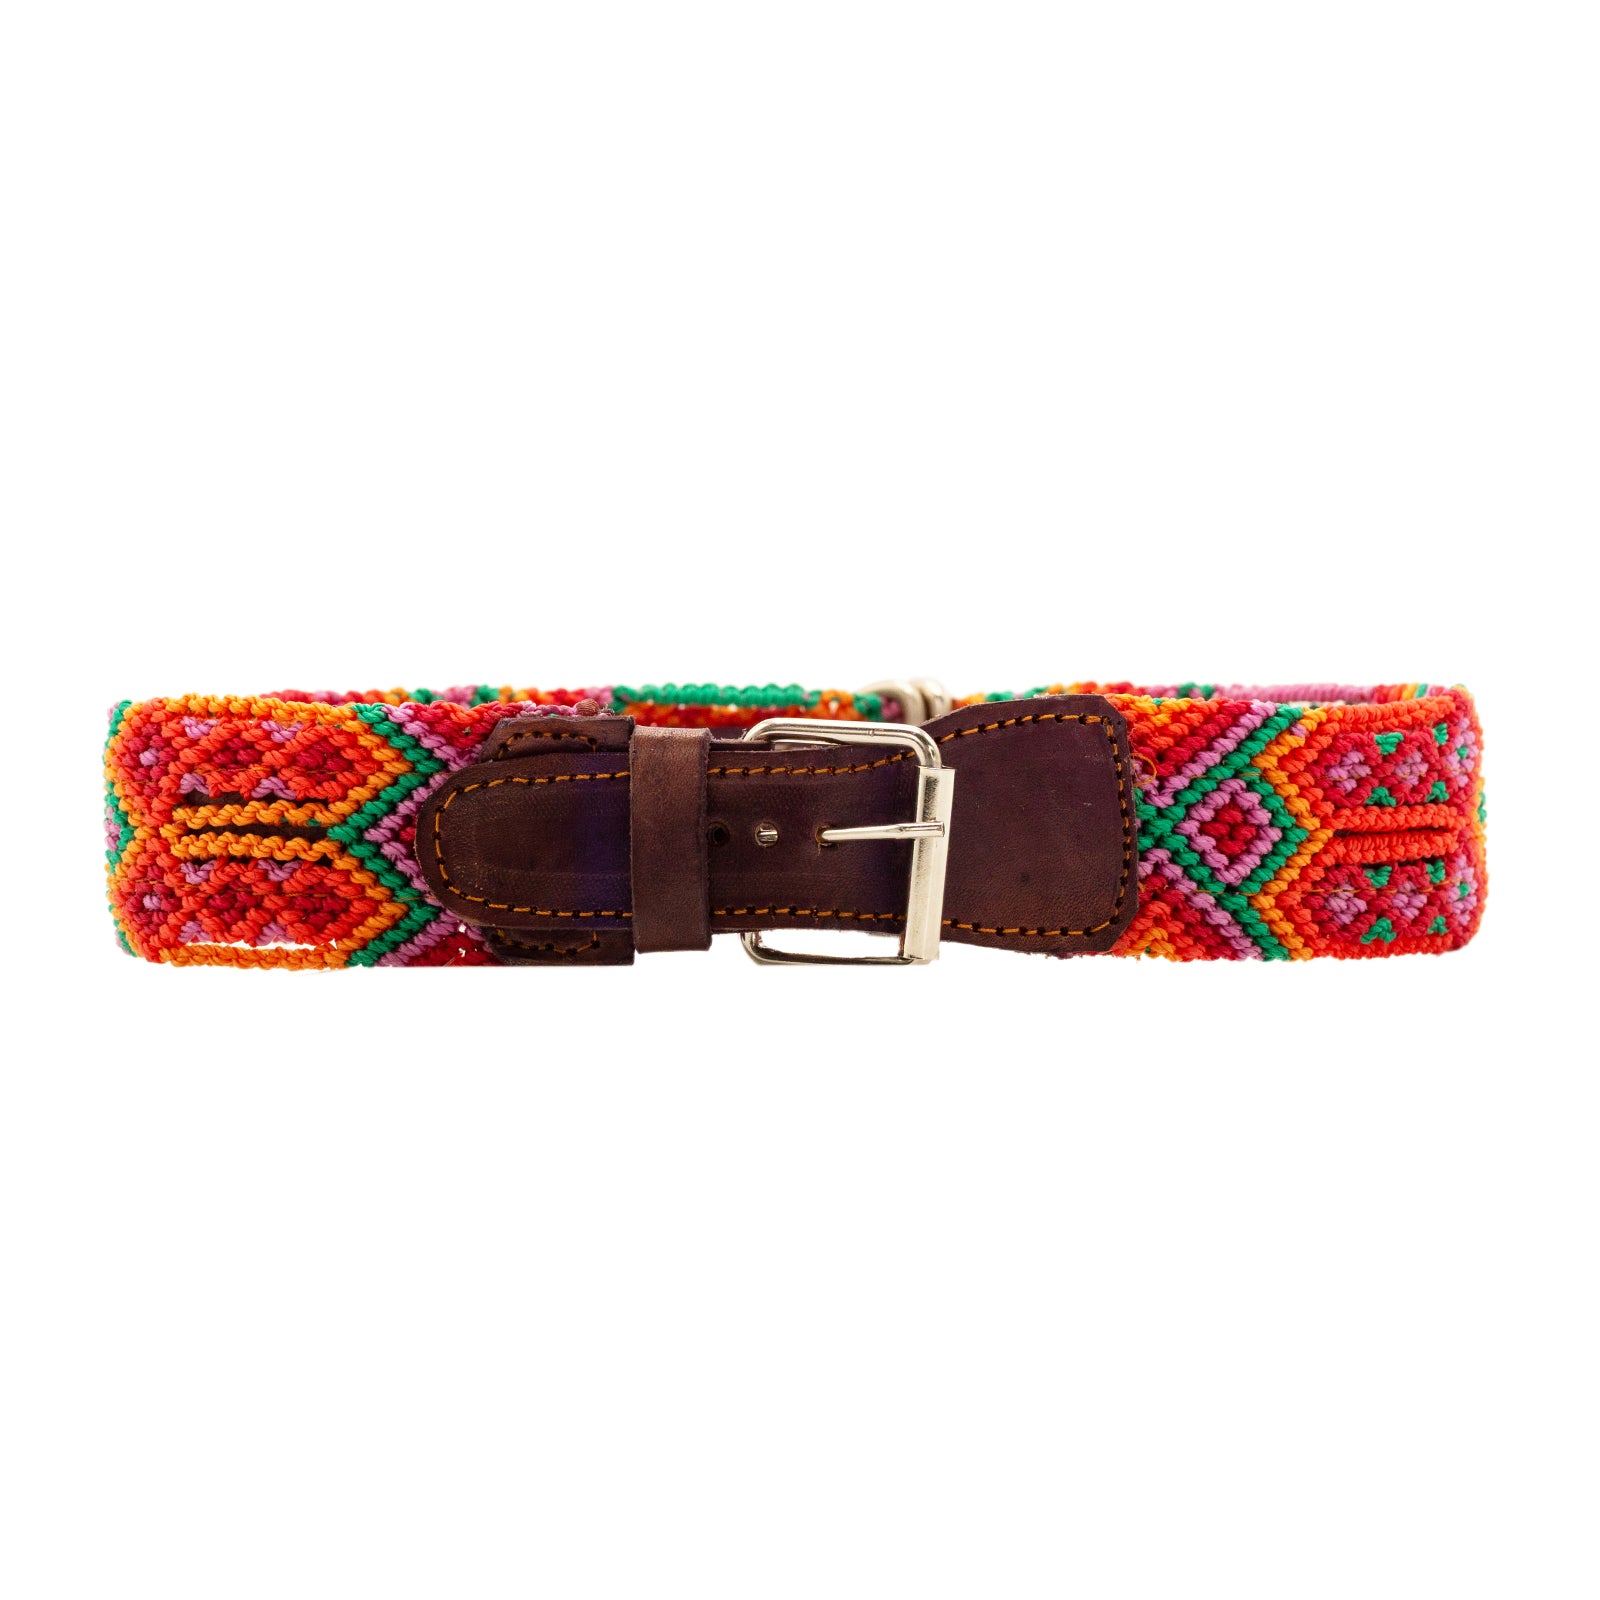 Handwoven dog collar showcasing a harmonious blend of colors